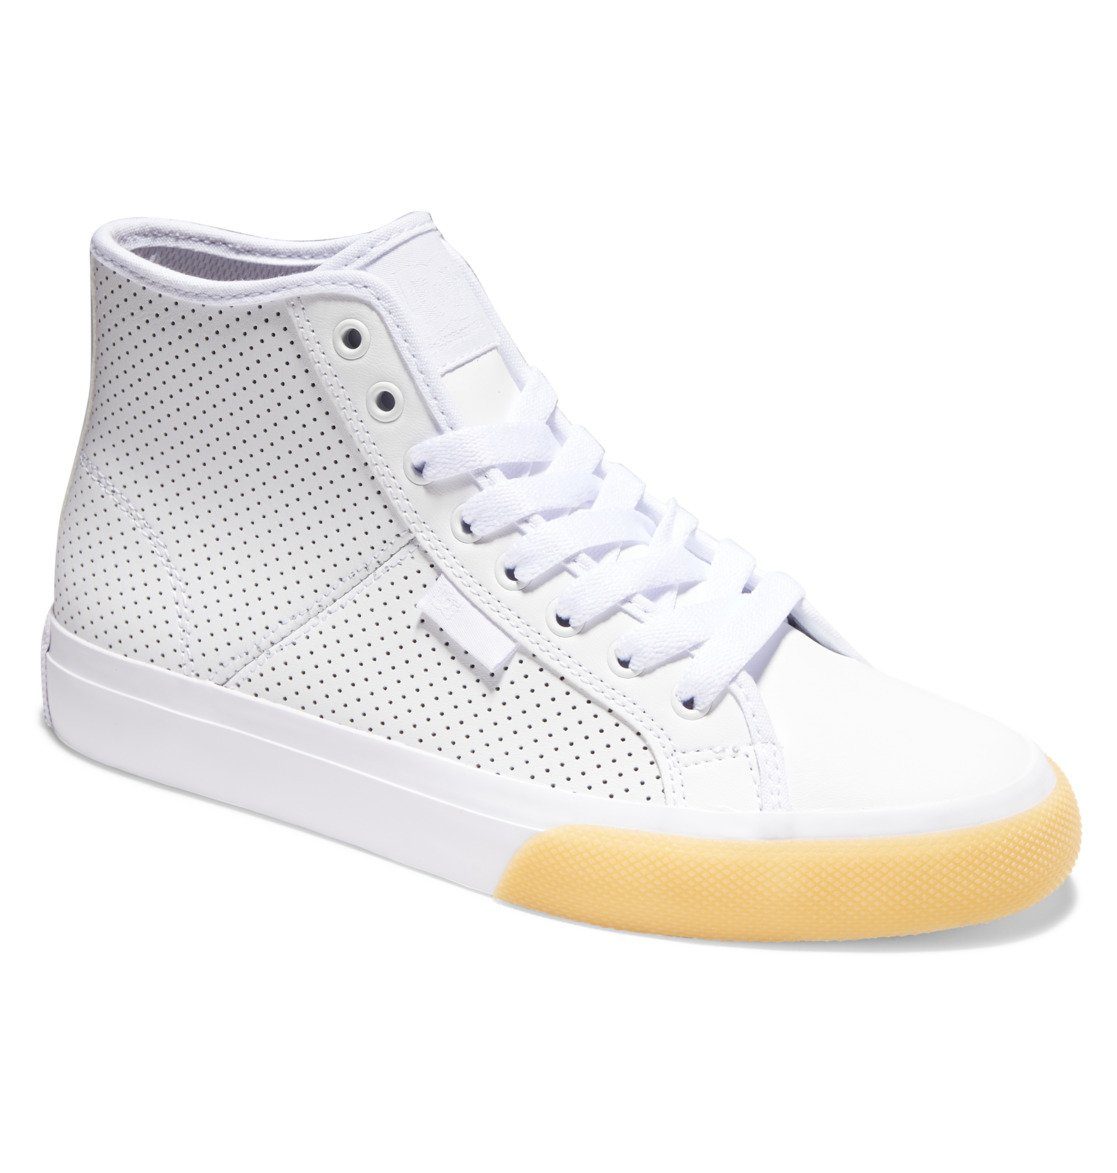 Sneaker White/Gum Shoes Manual DC Hi